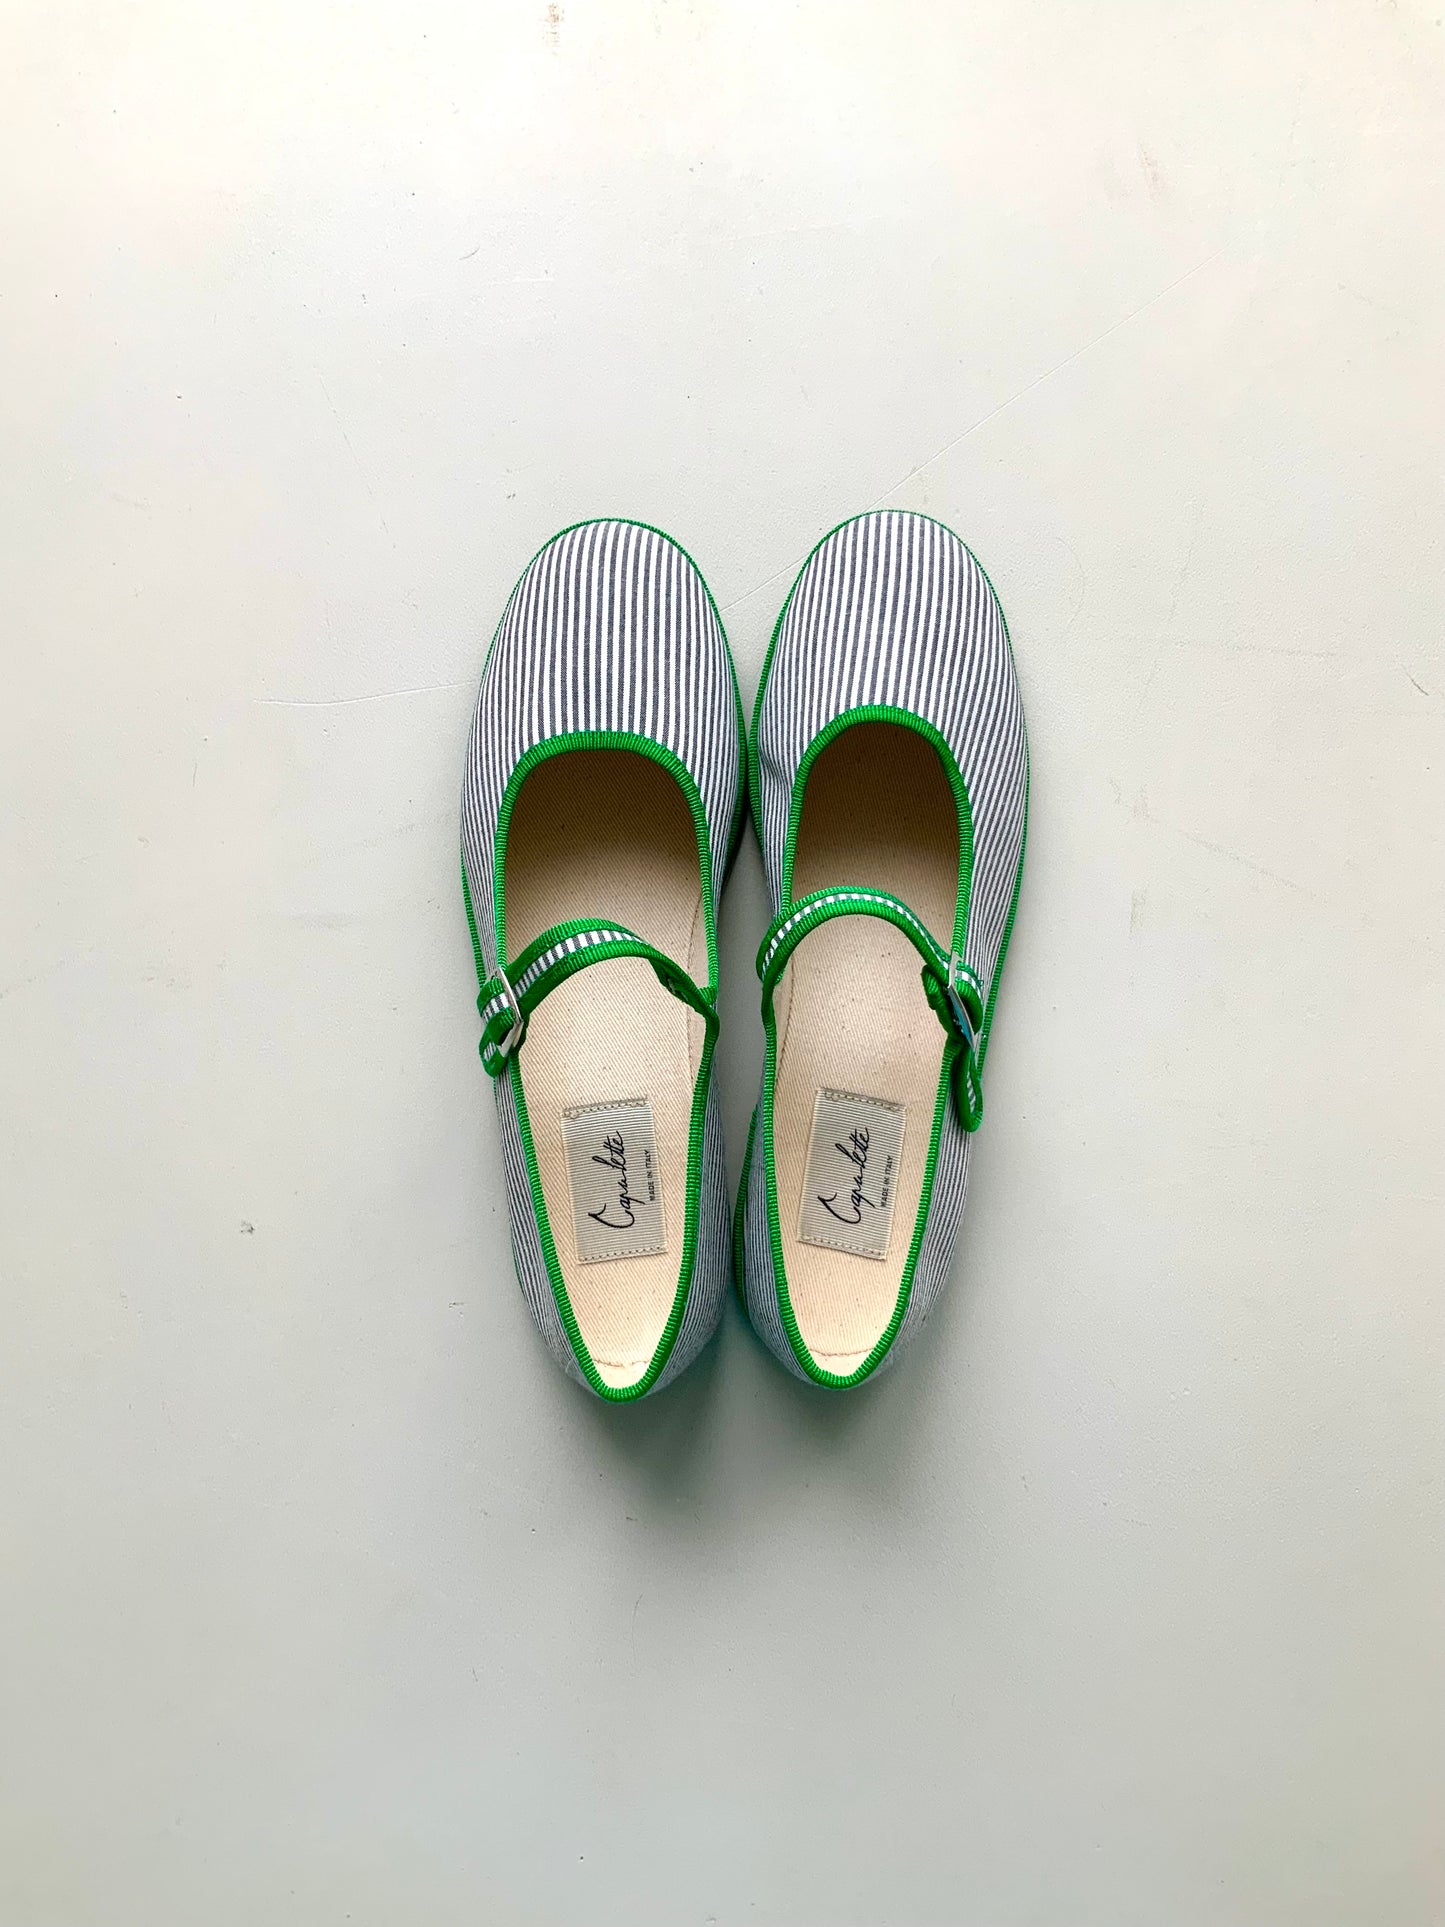 Shoes Women - Friulane - Striped Grey